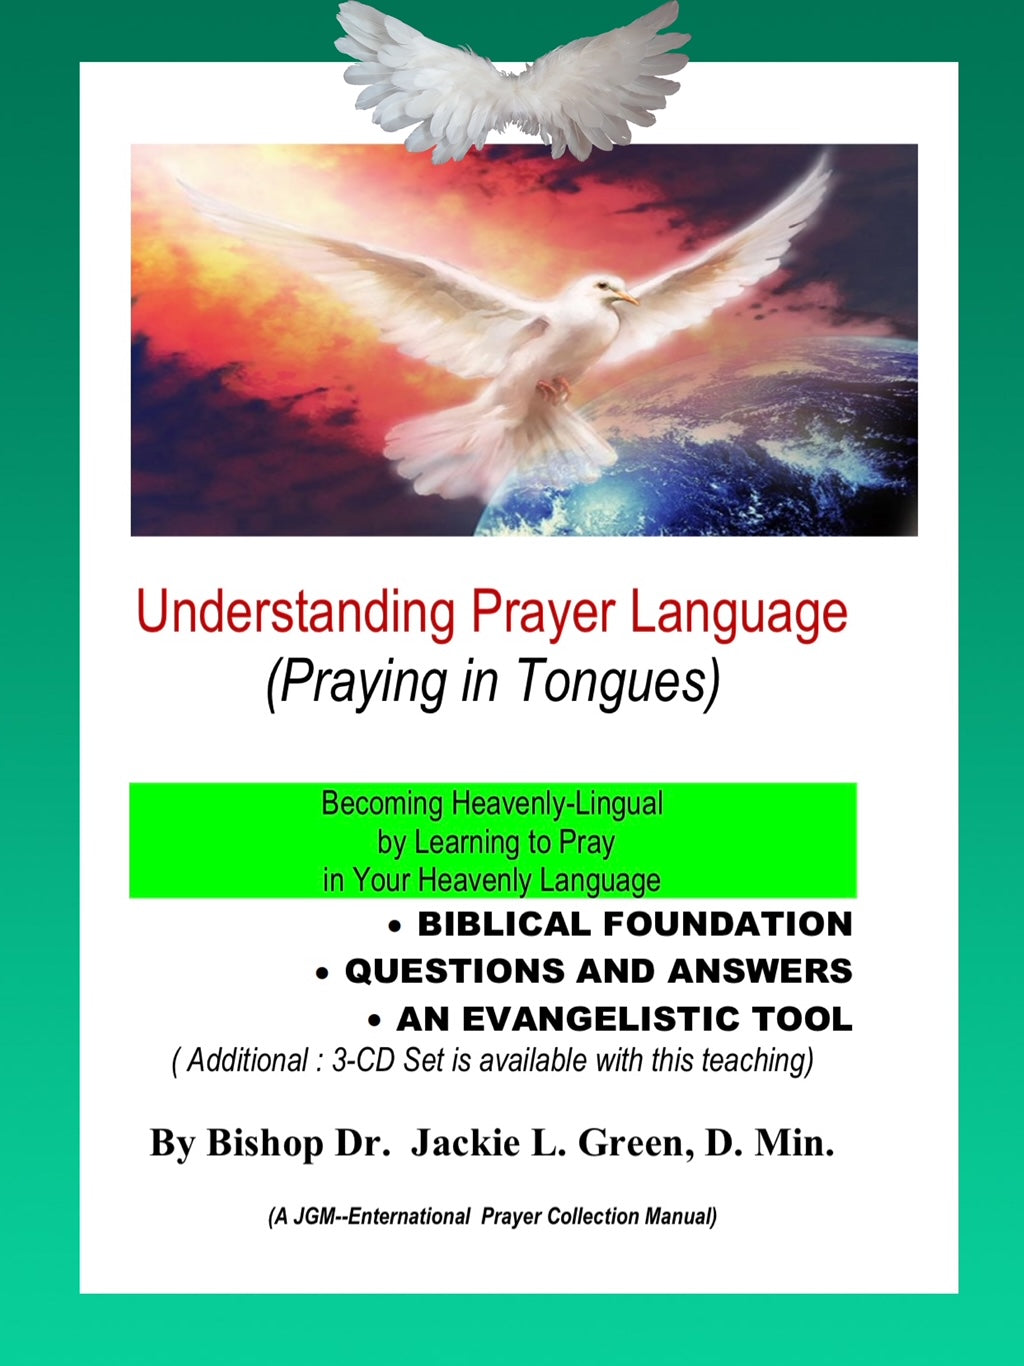 UNDERSTANDING PRAYER LANGUAGE